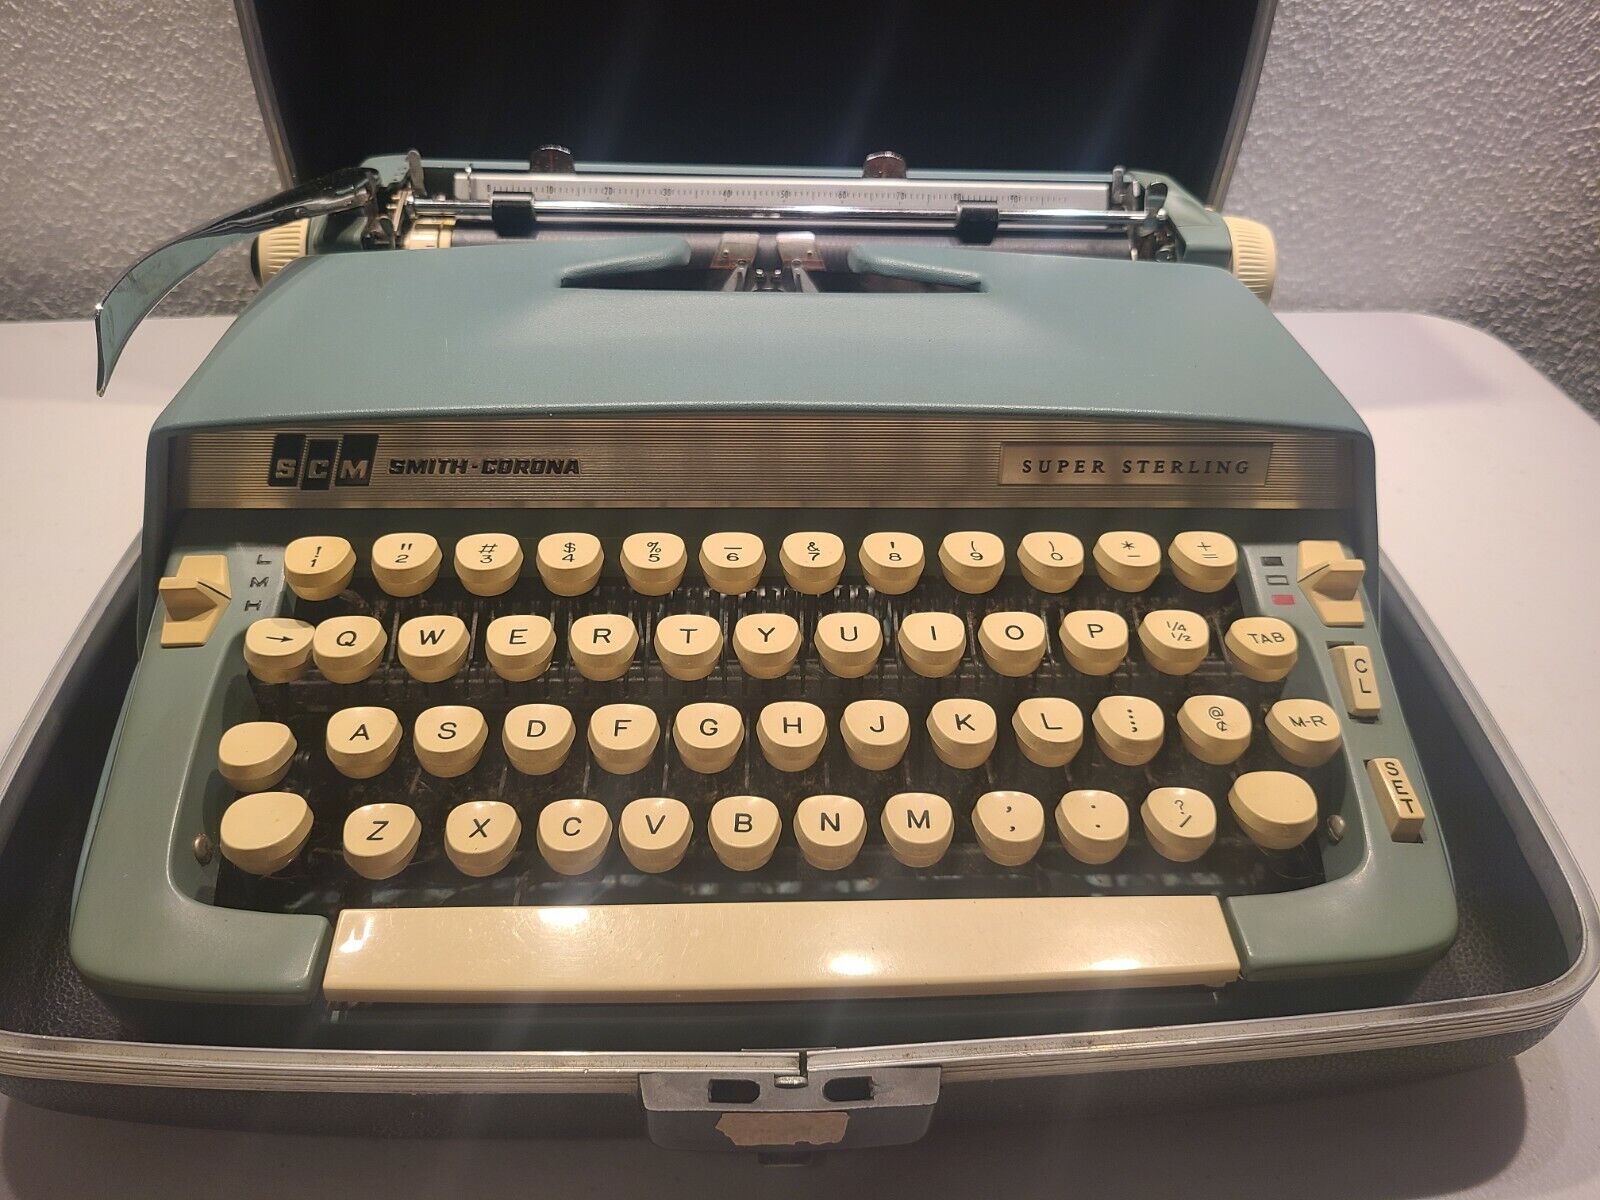 1969 Vintage Smith-Corona Super Sterling Typewriter with Key.